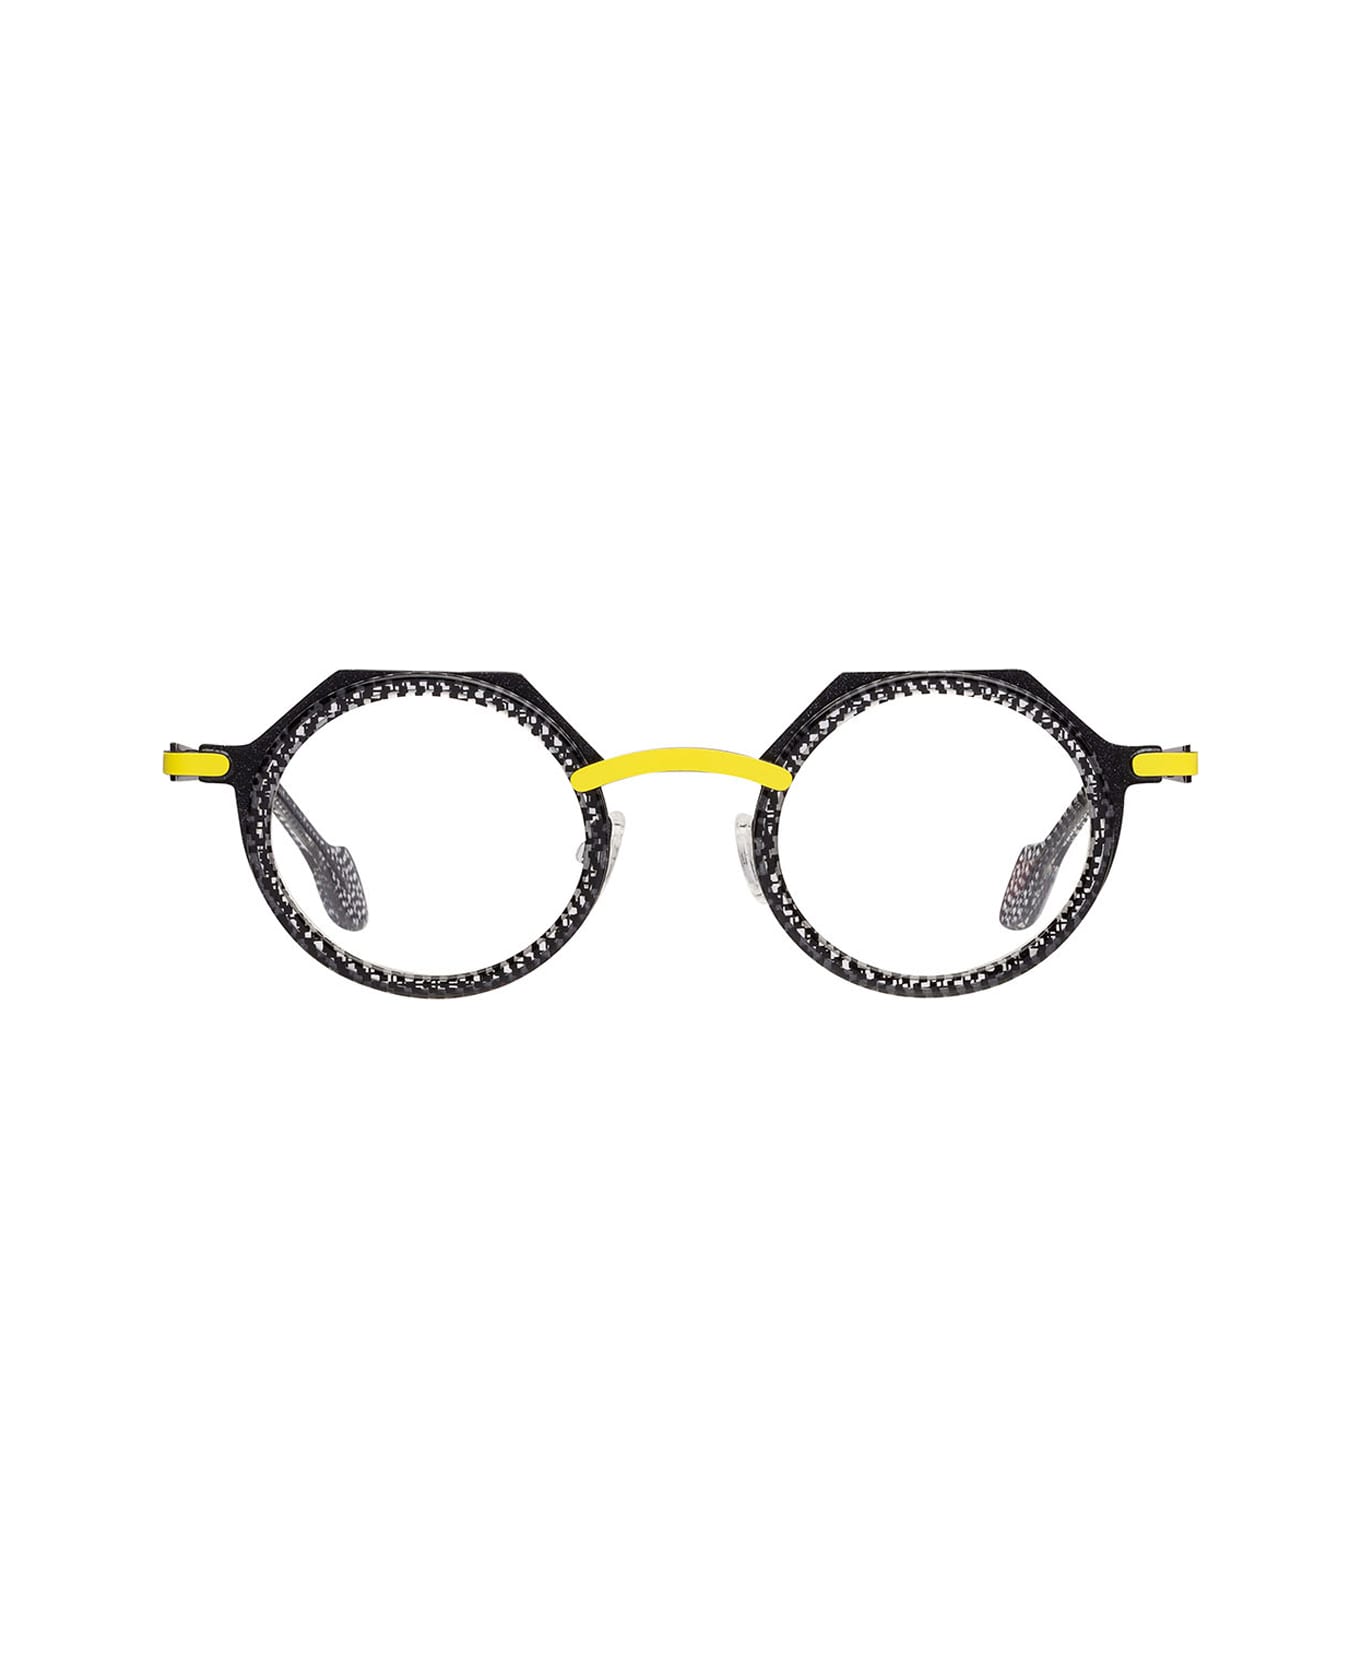 Matttew Ippon Glasses - Nero アイウェア